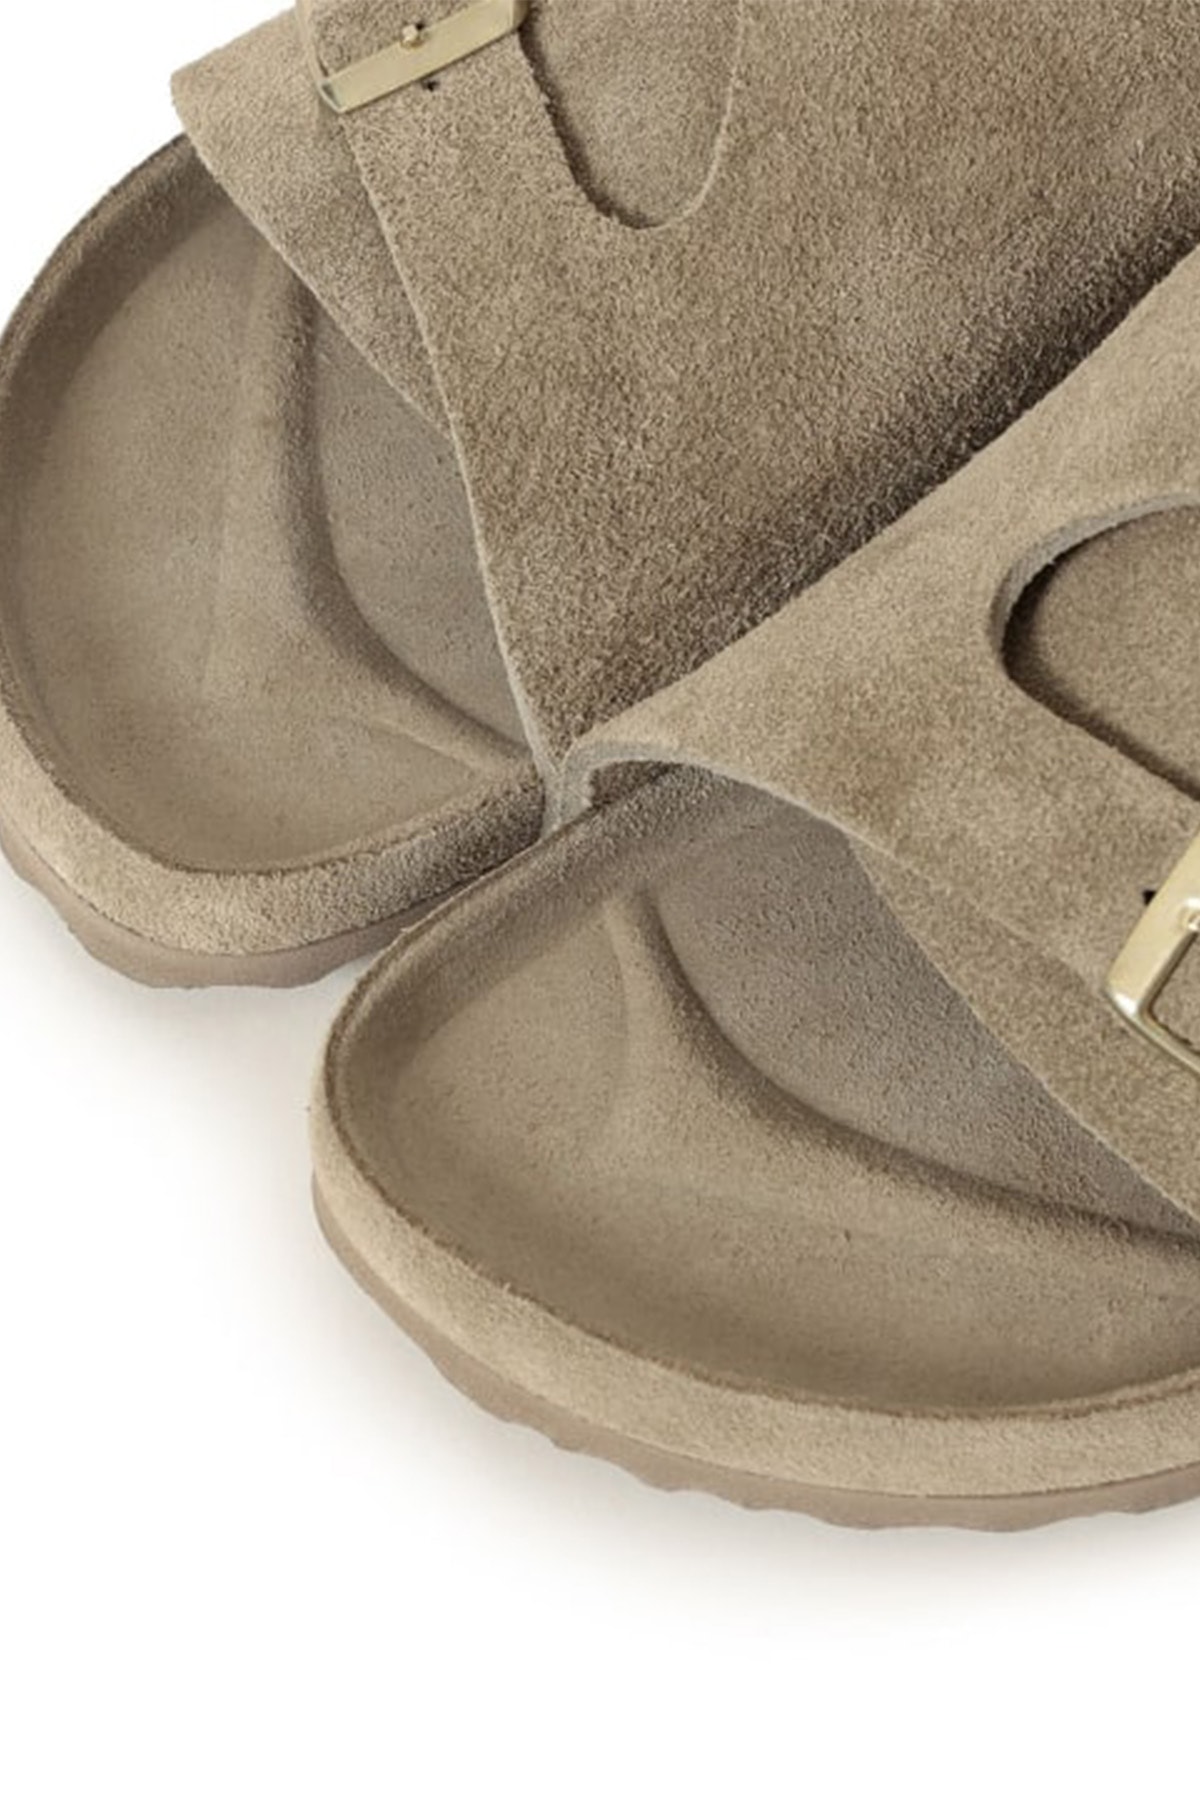 birkenstock beams zurich sandals taupe colorway footwear collaborations